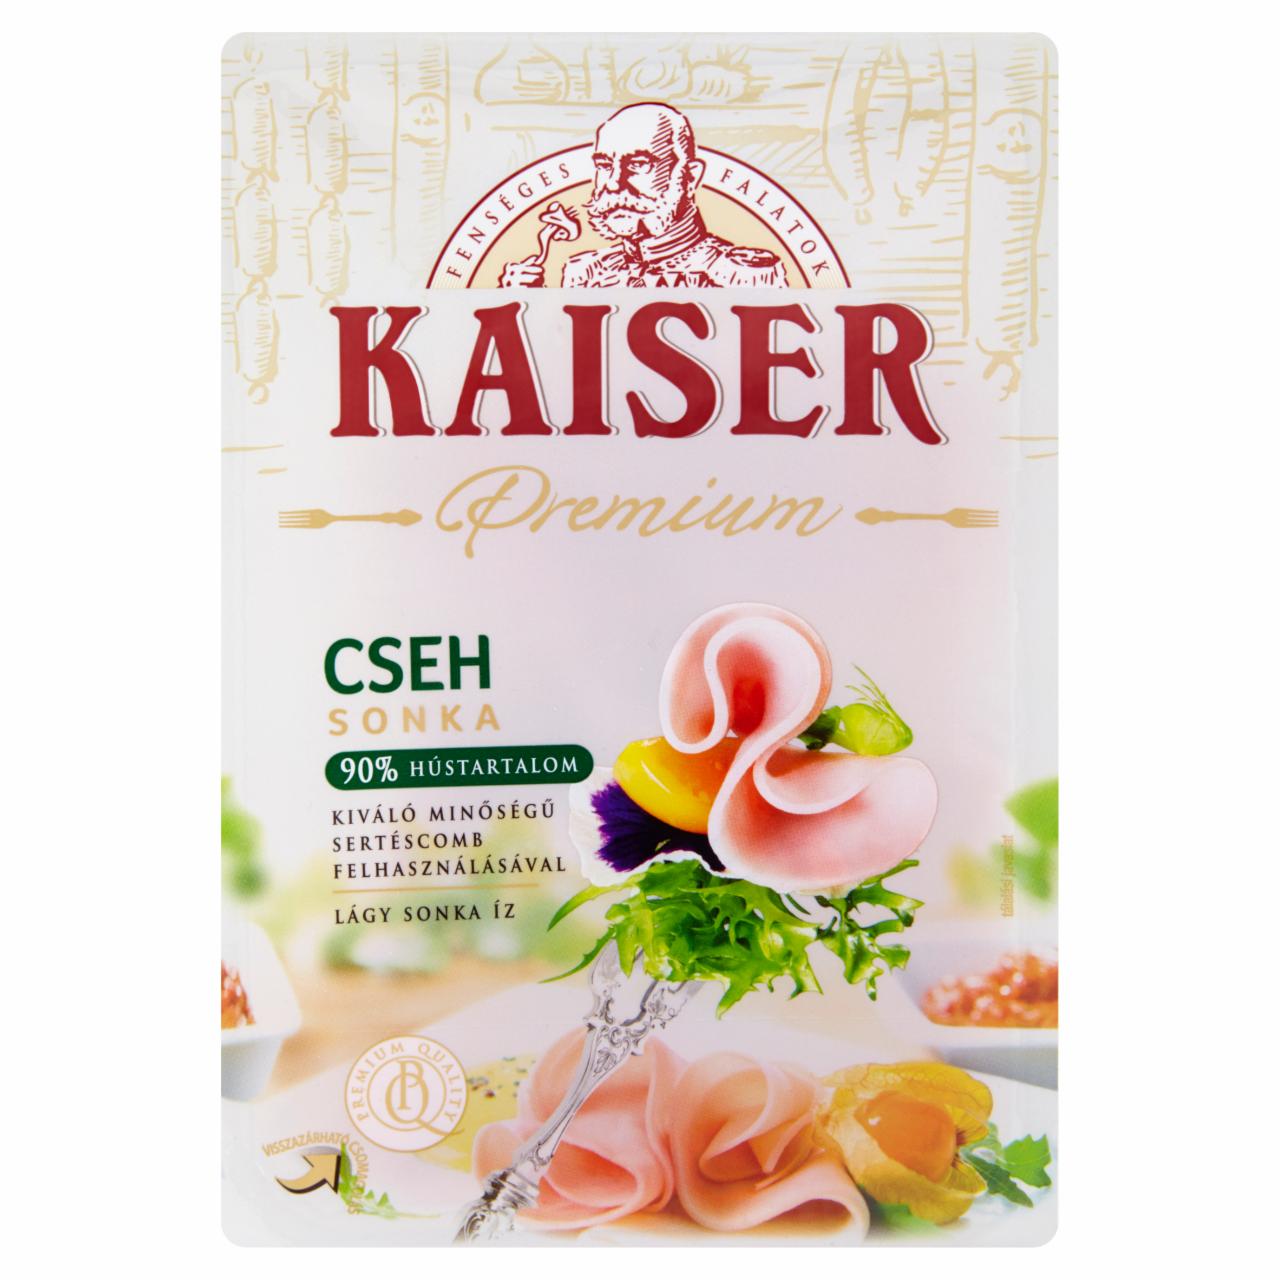 Képek - Kaiser Premium cseh sonka 100 g